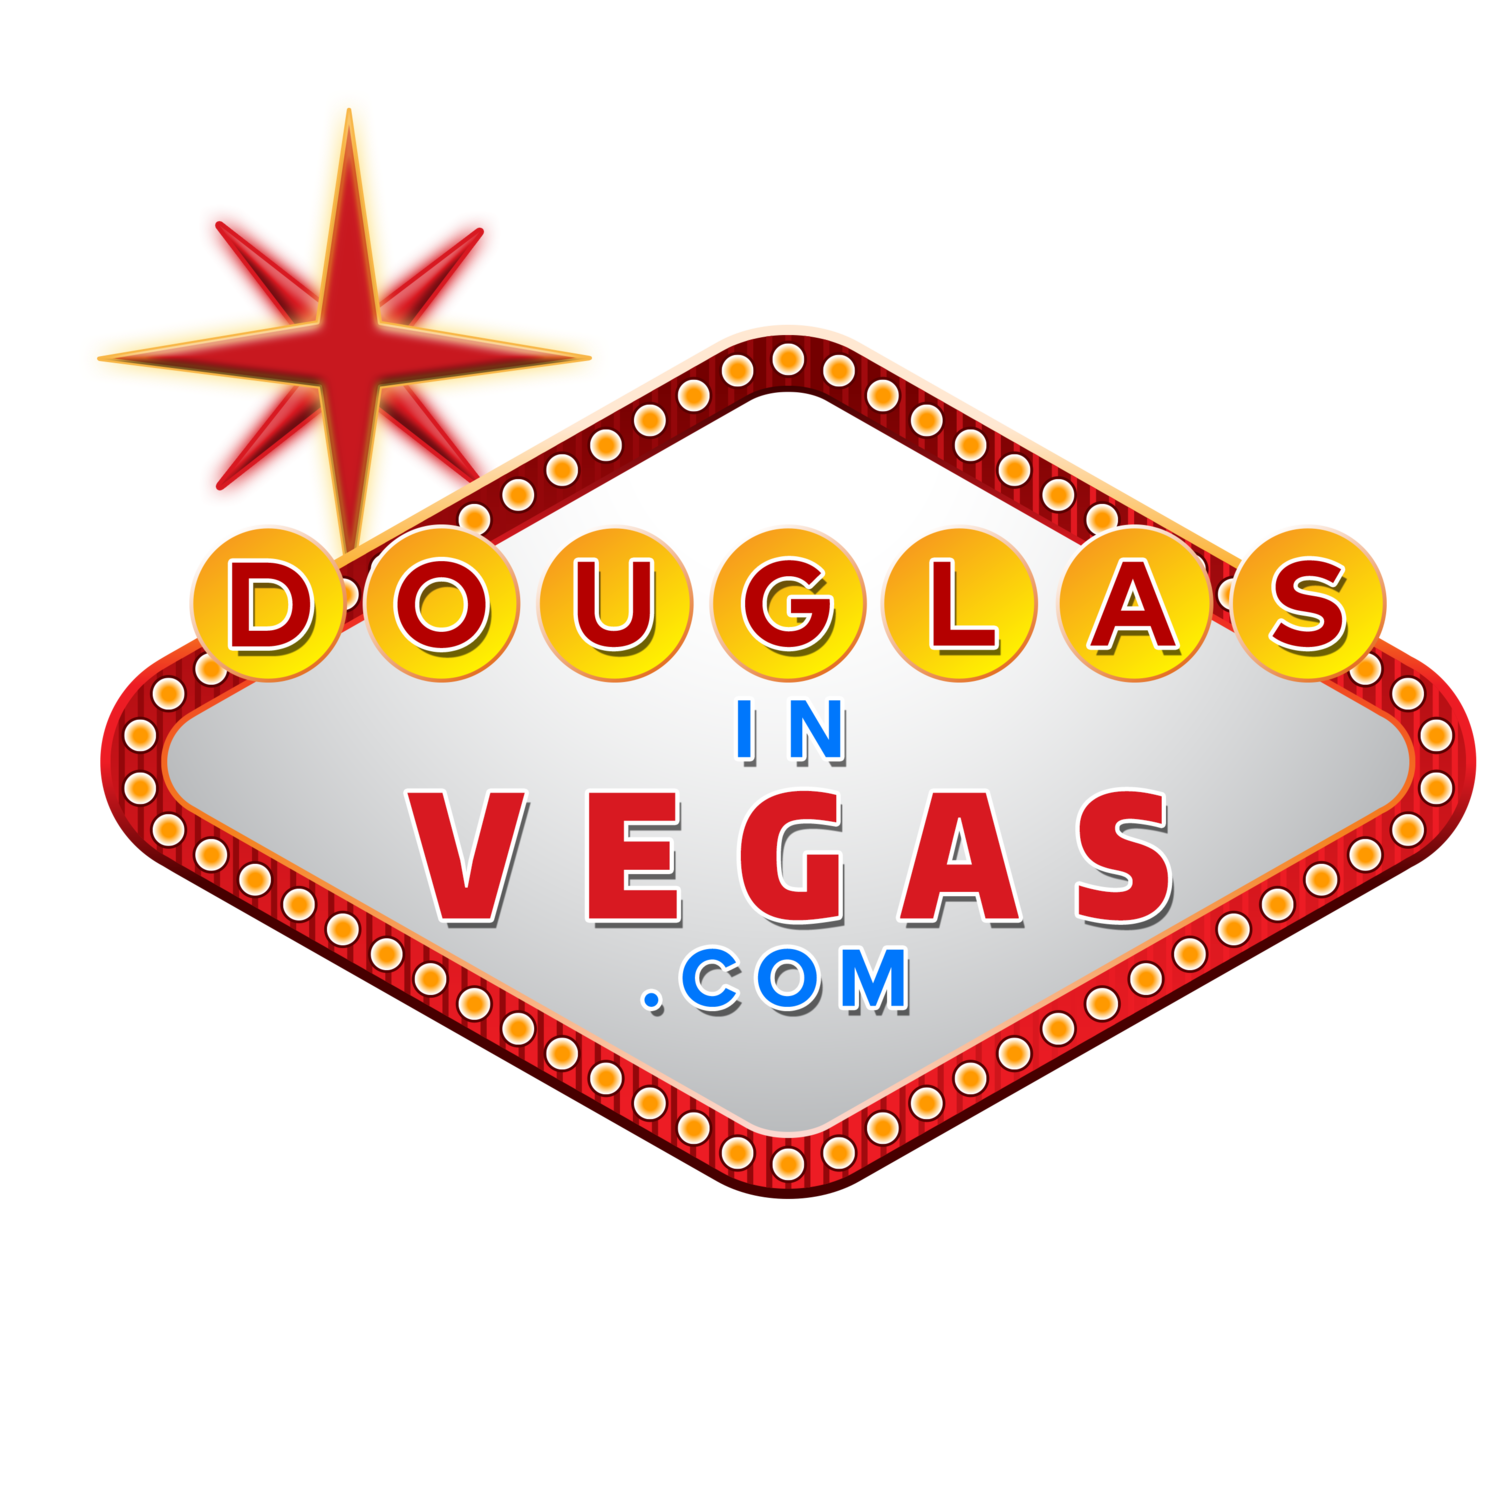 Douglas in Vegas